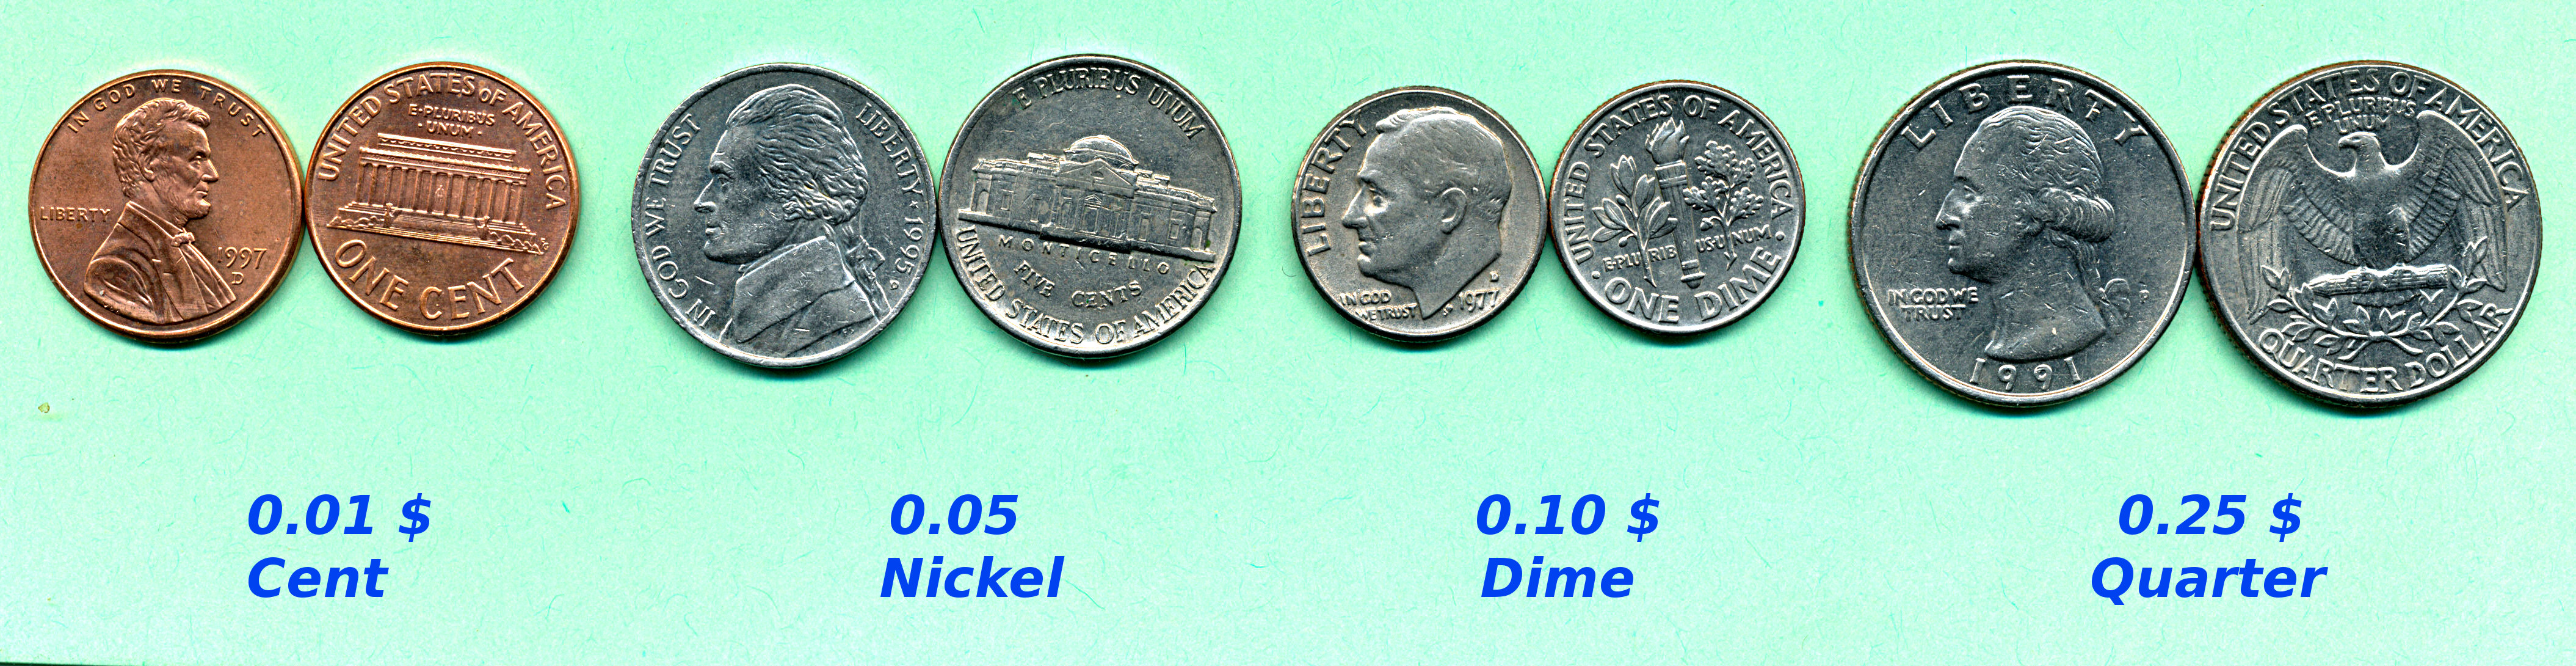 Pin Button Badge Ø38mm Dollar Américain $ Devise Monnaie USA 